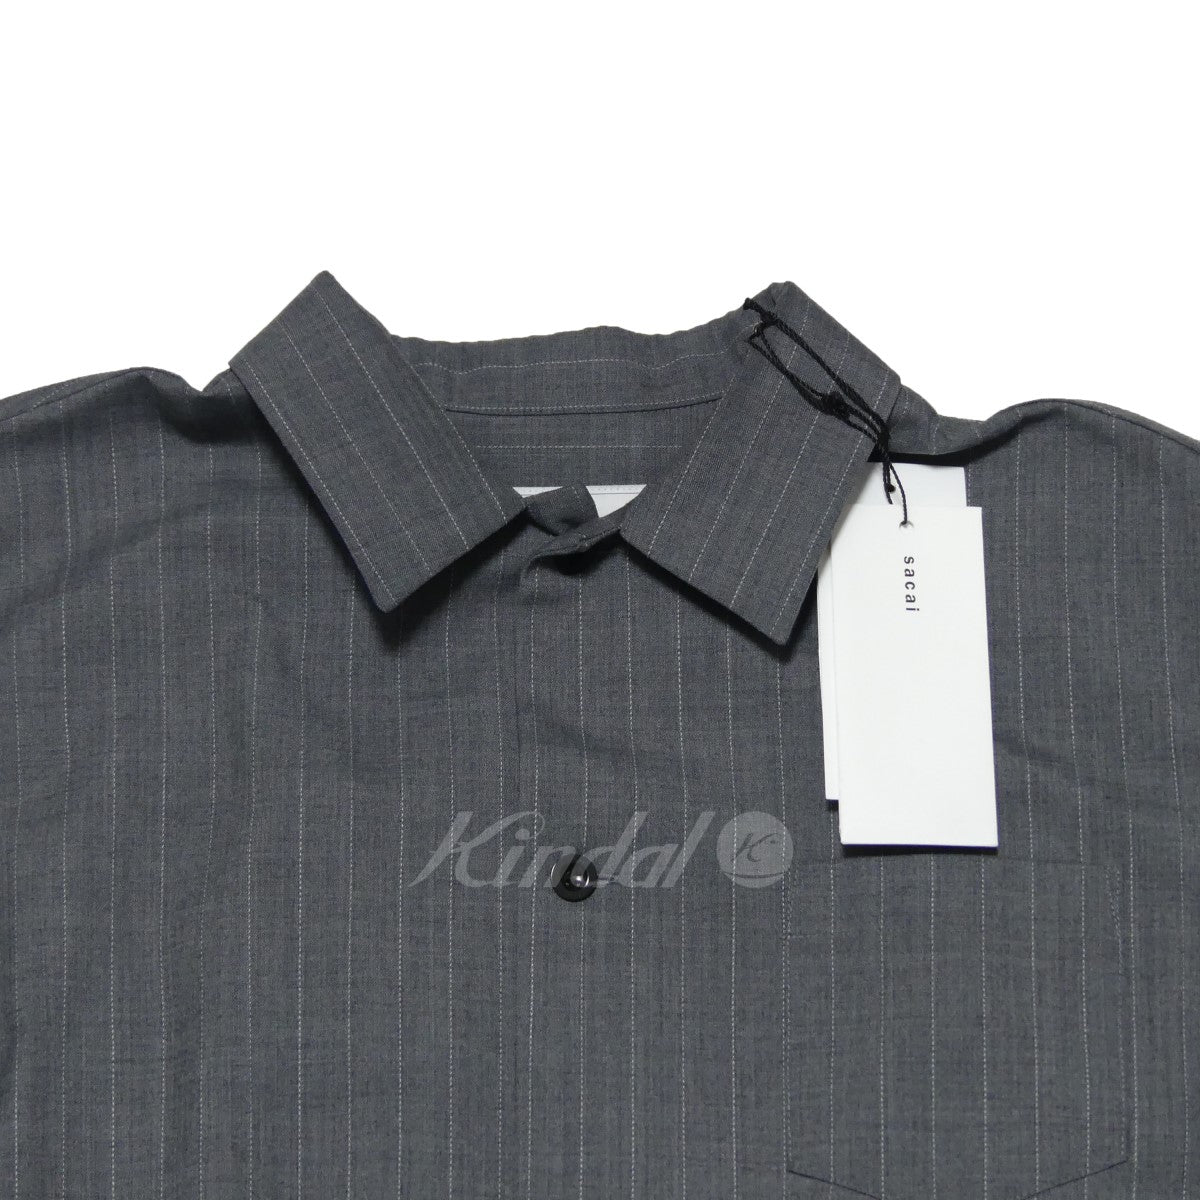 sacai(サカイ) 24SS Chalk Stripe Shirt チョーク ストライプ バックプリーツ シャツ